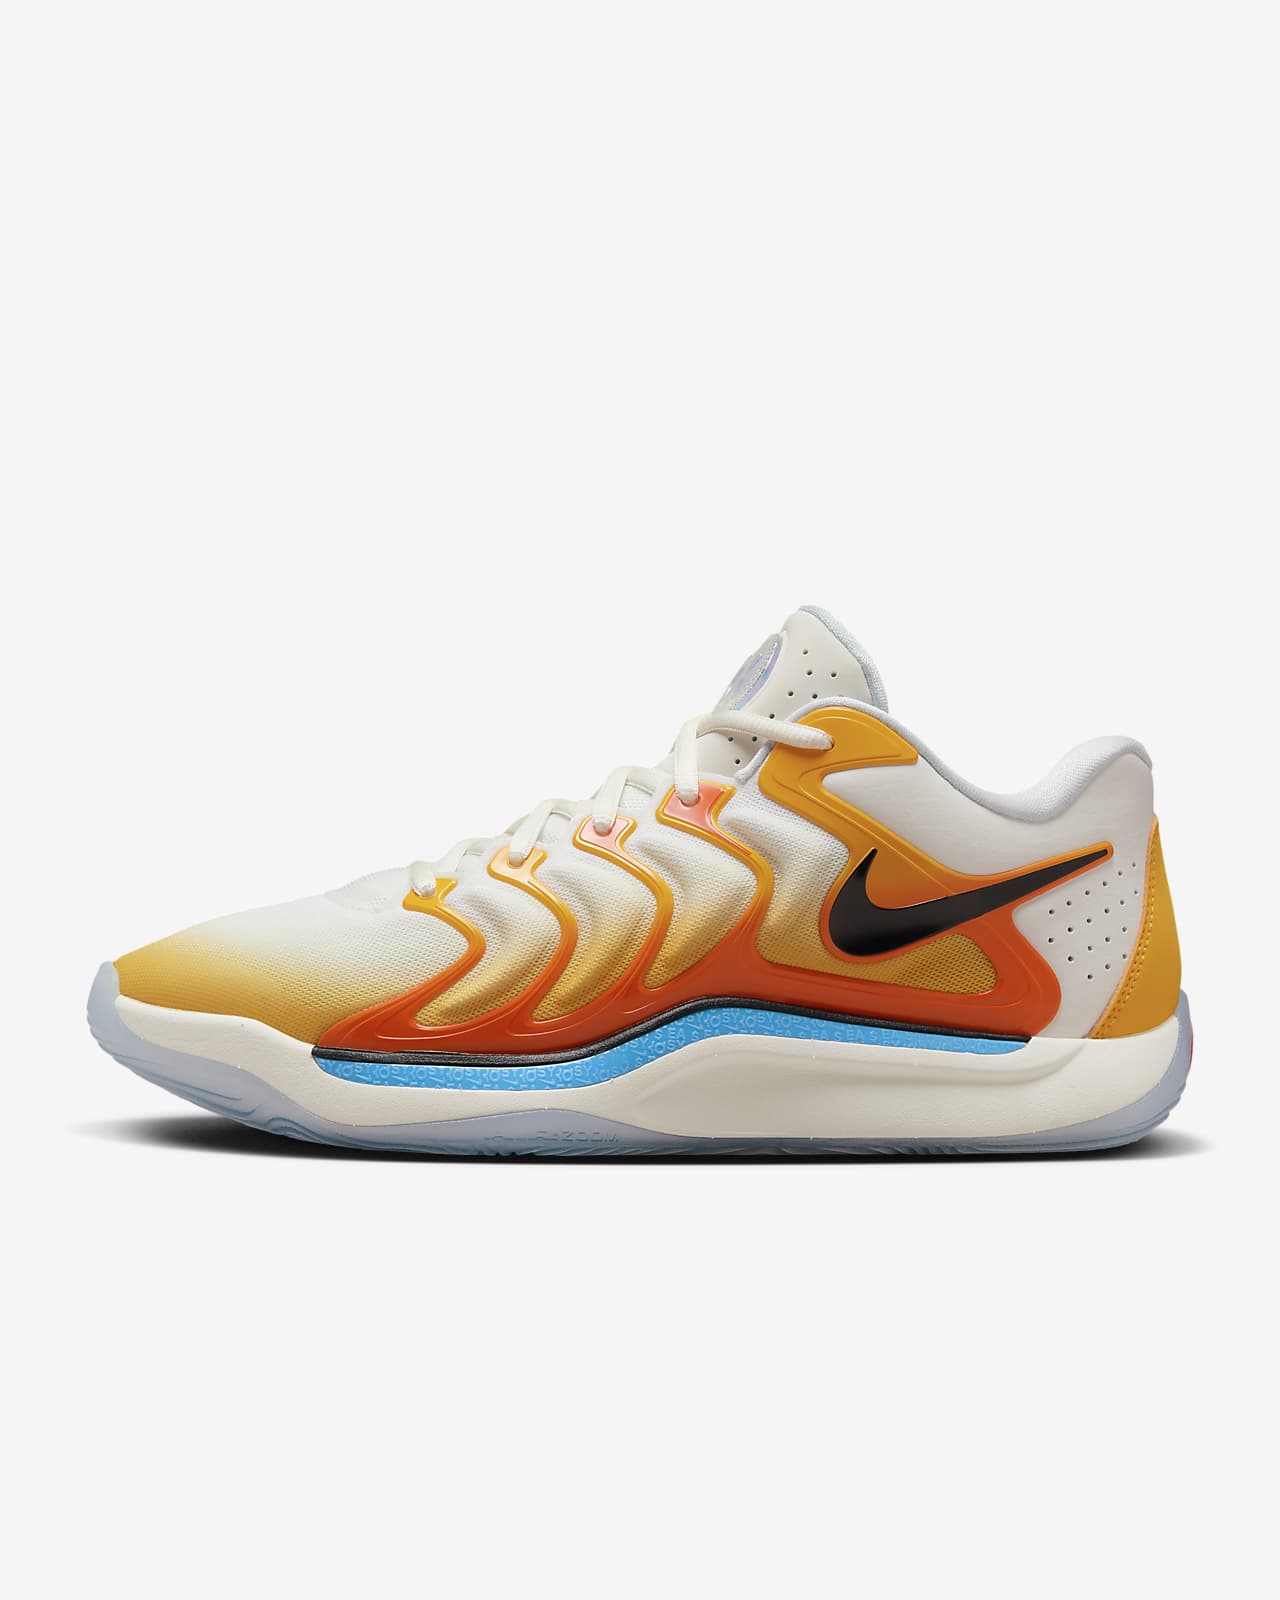 KD17 "Sunrise" Basketball Shoes